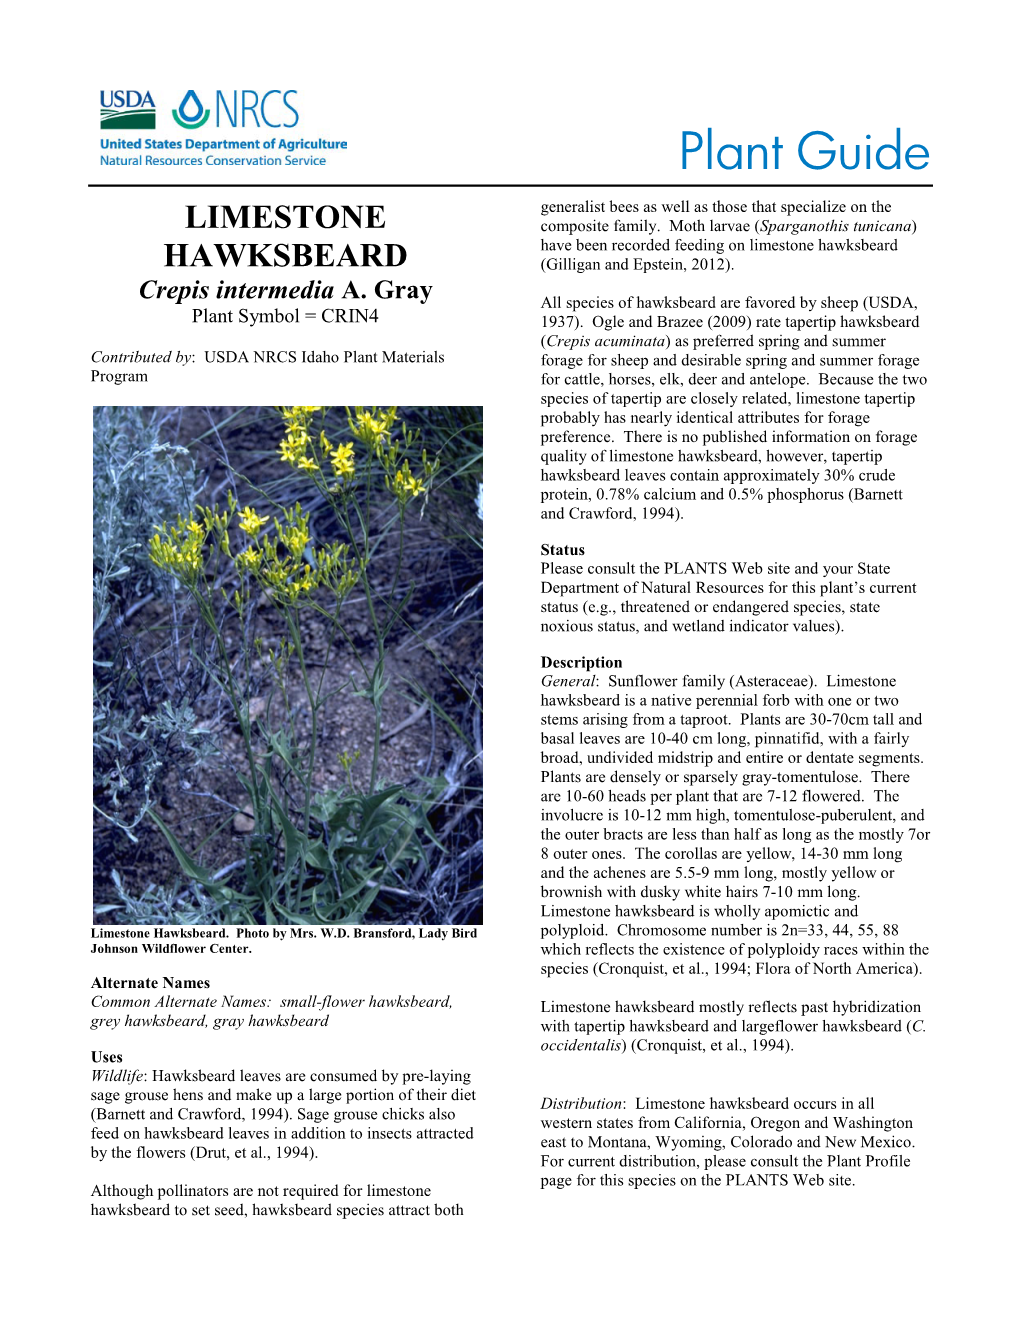 Plant Guide for Limestone Hawksbeard (Crepis Intermedia)